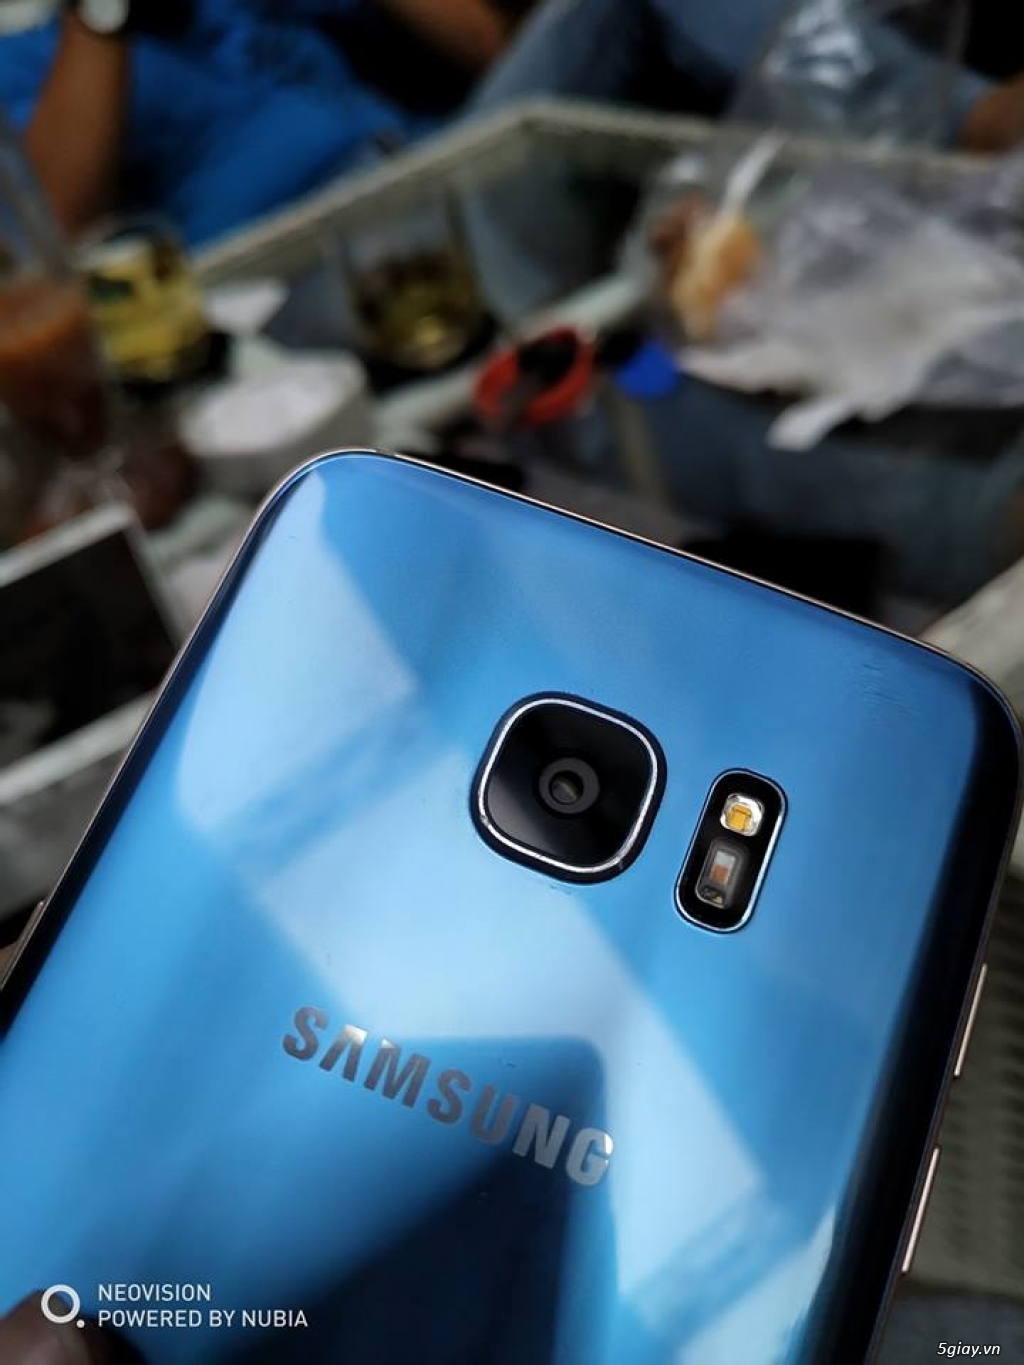 Samsung S7 Edge blue coral, Note 5, Asus zen 4 max pro, 4 max - 4